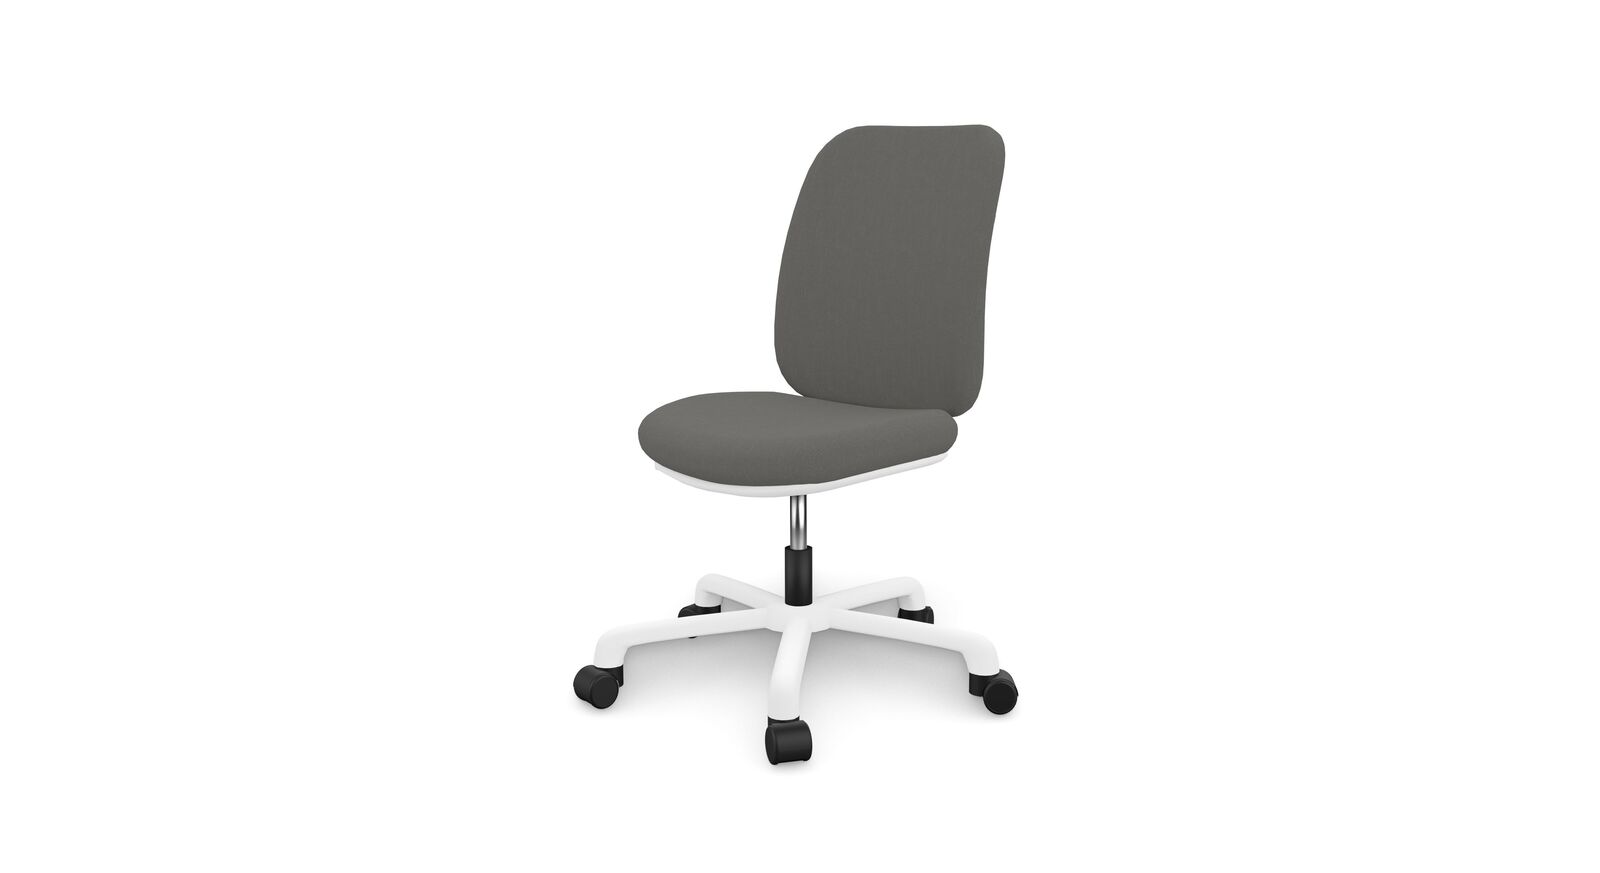 LIFETIME Bürostuhl Comfort mit kindgerechtem Design in Grau-Weiß